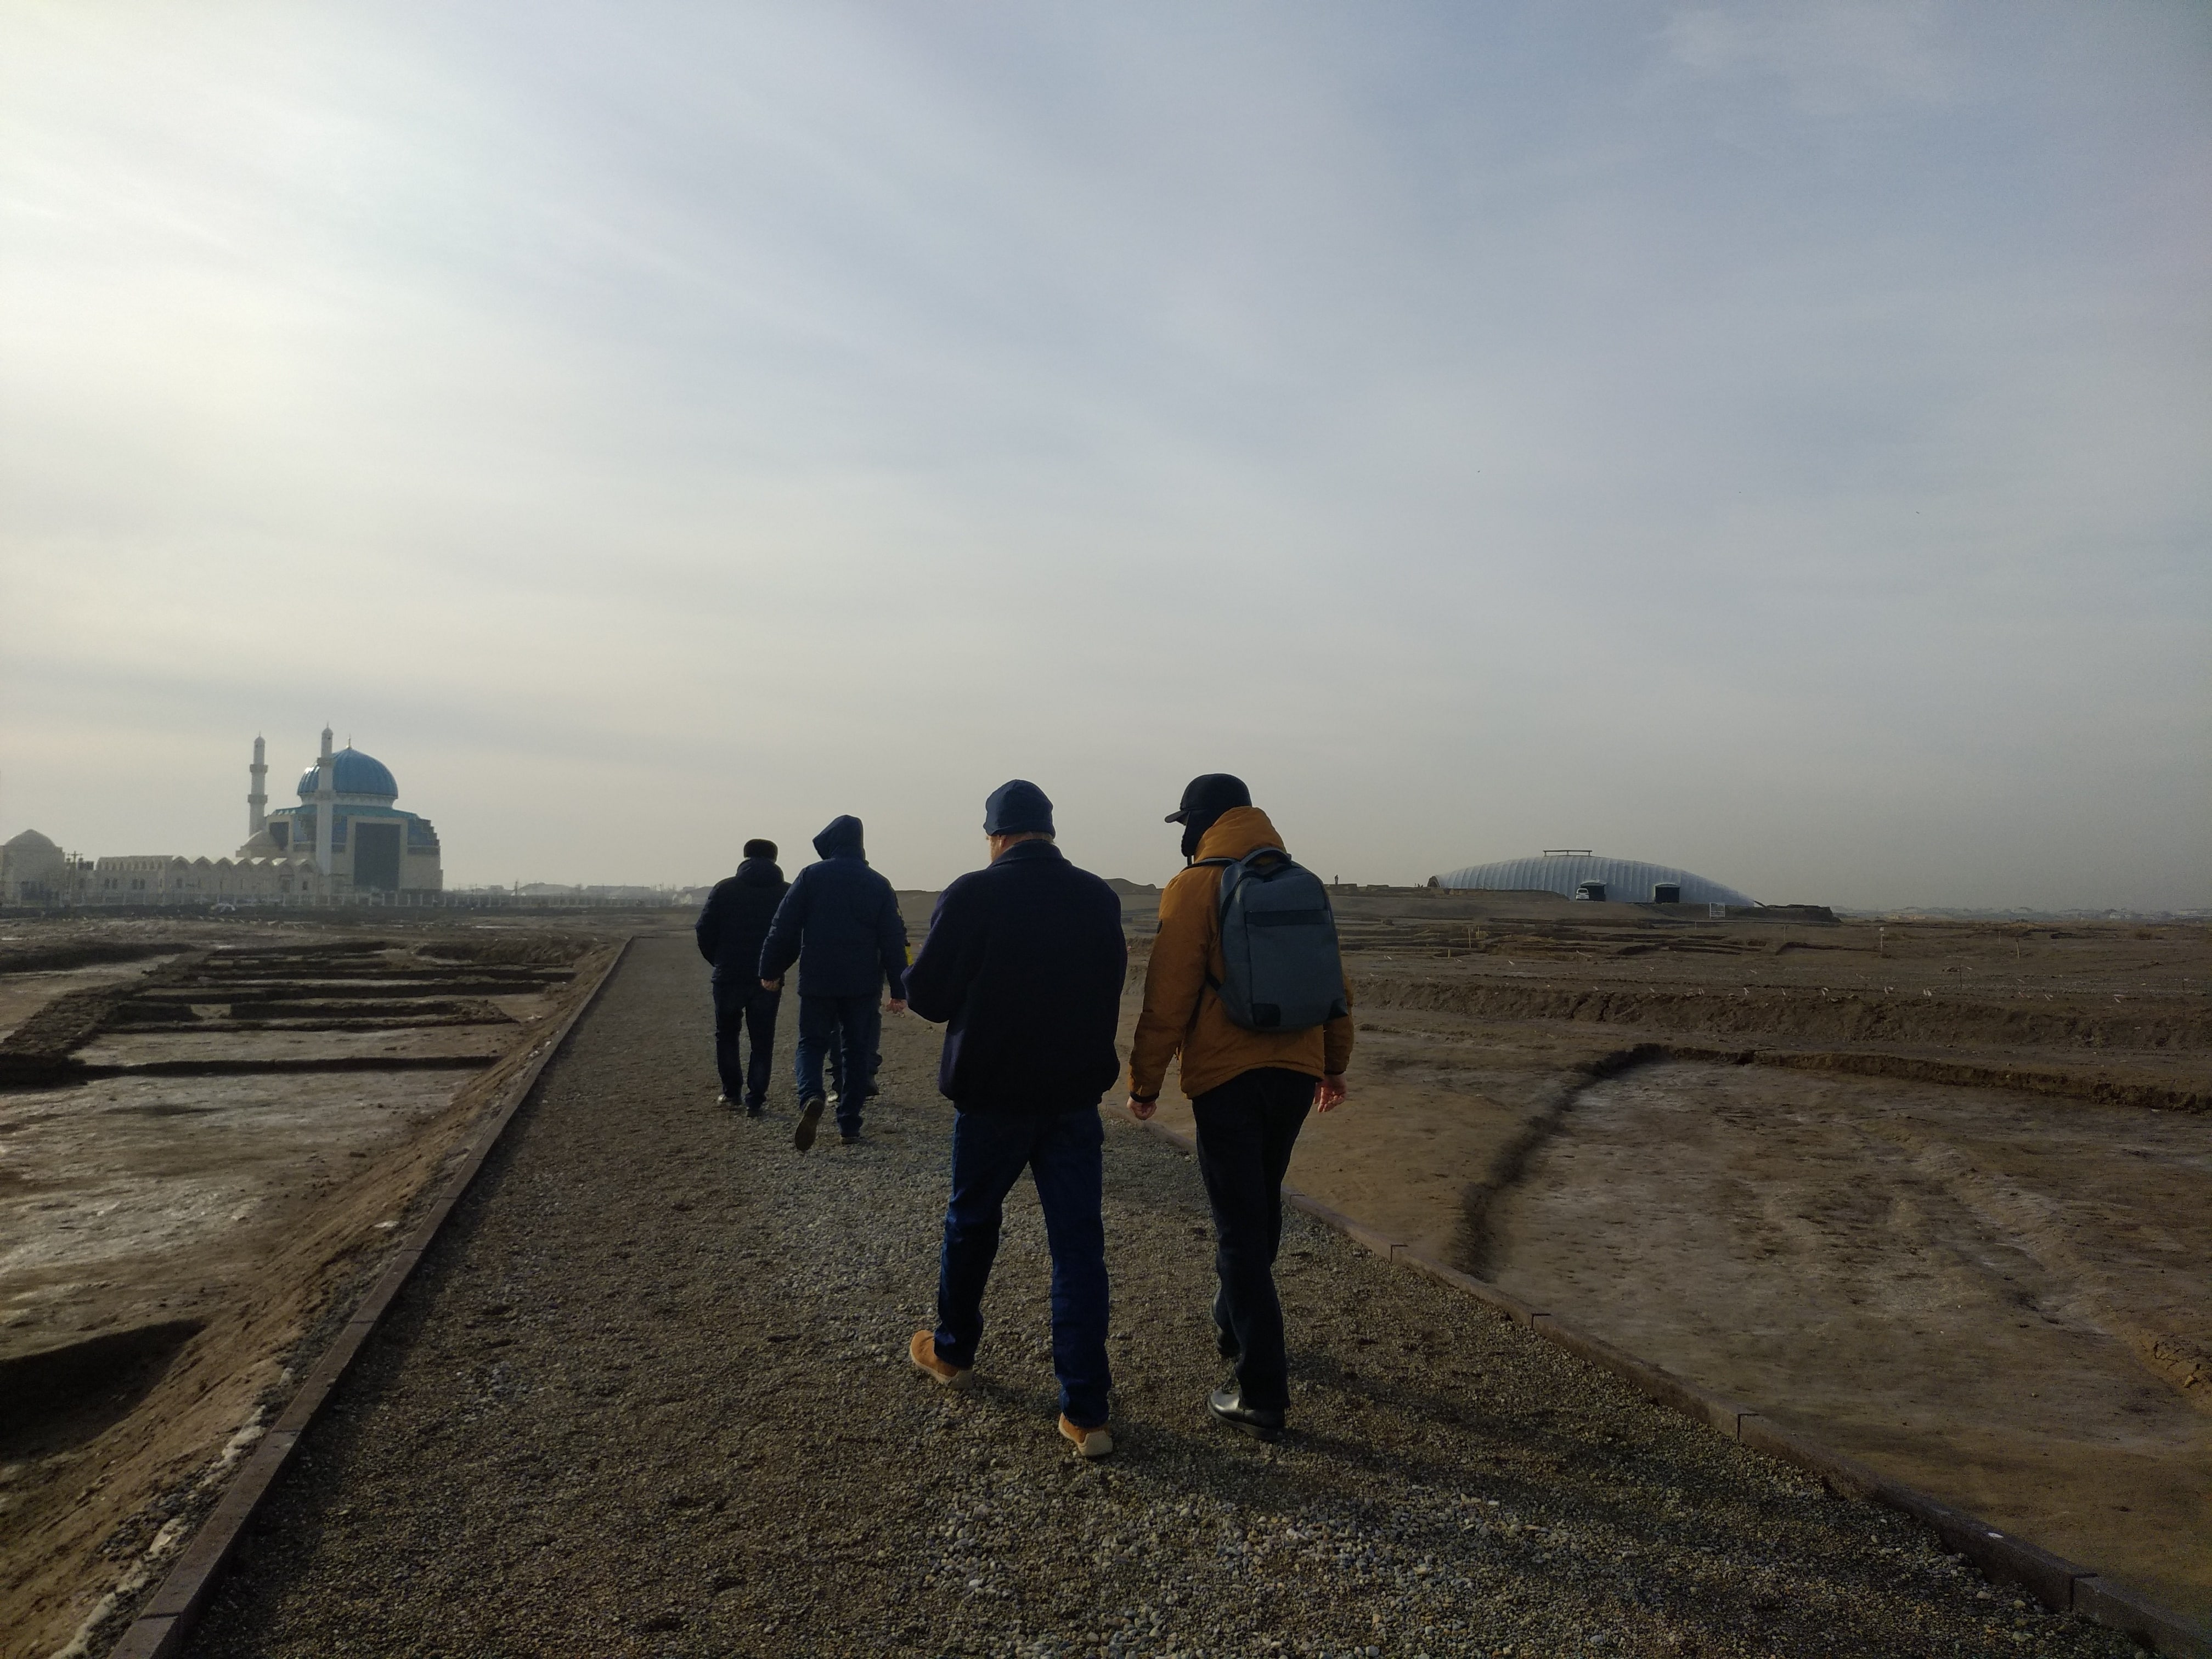 Exploring the Buffer Zone of the Mausoleum of Khoja Ahmed Yassawi, Kazakhstan. 2020